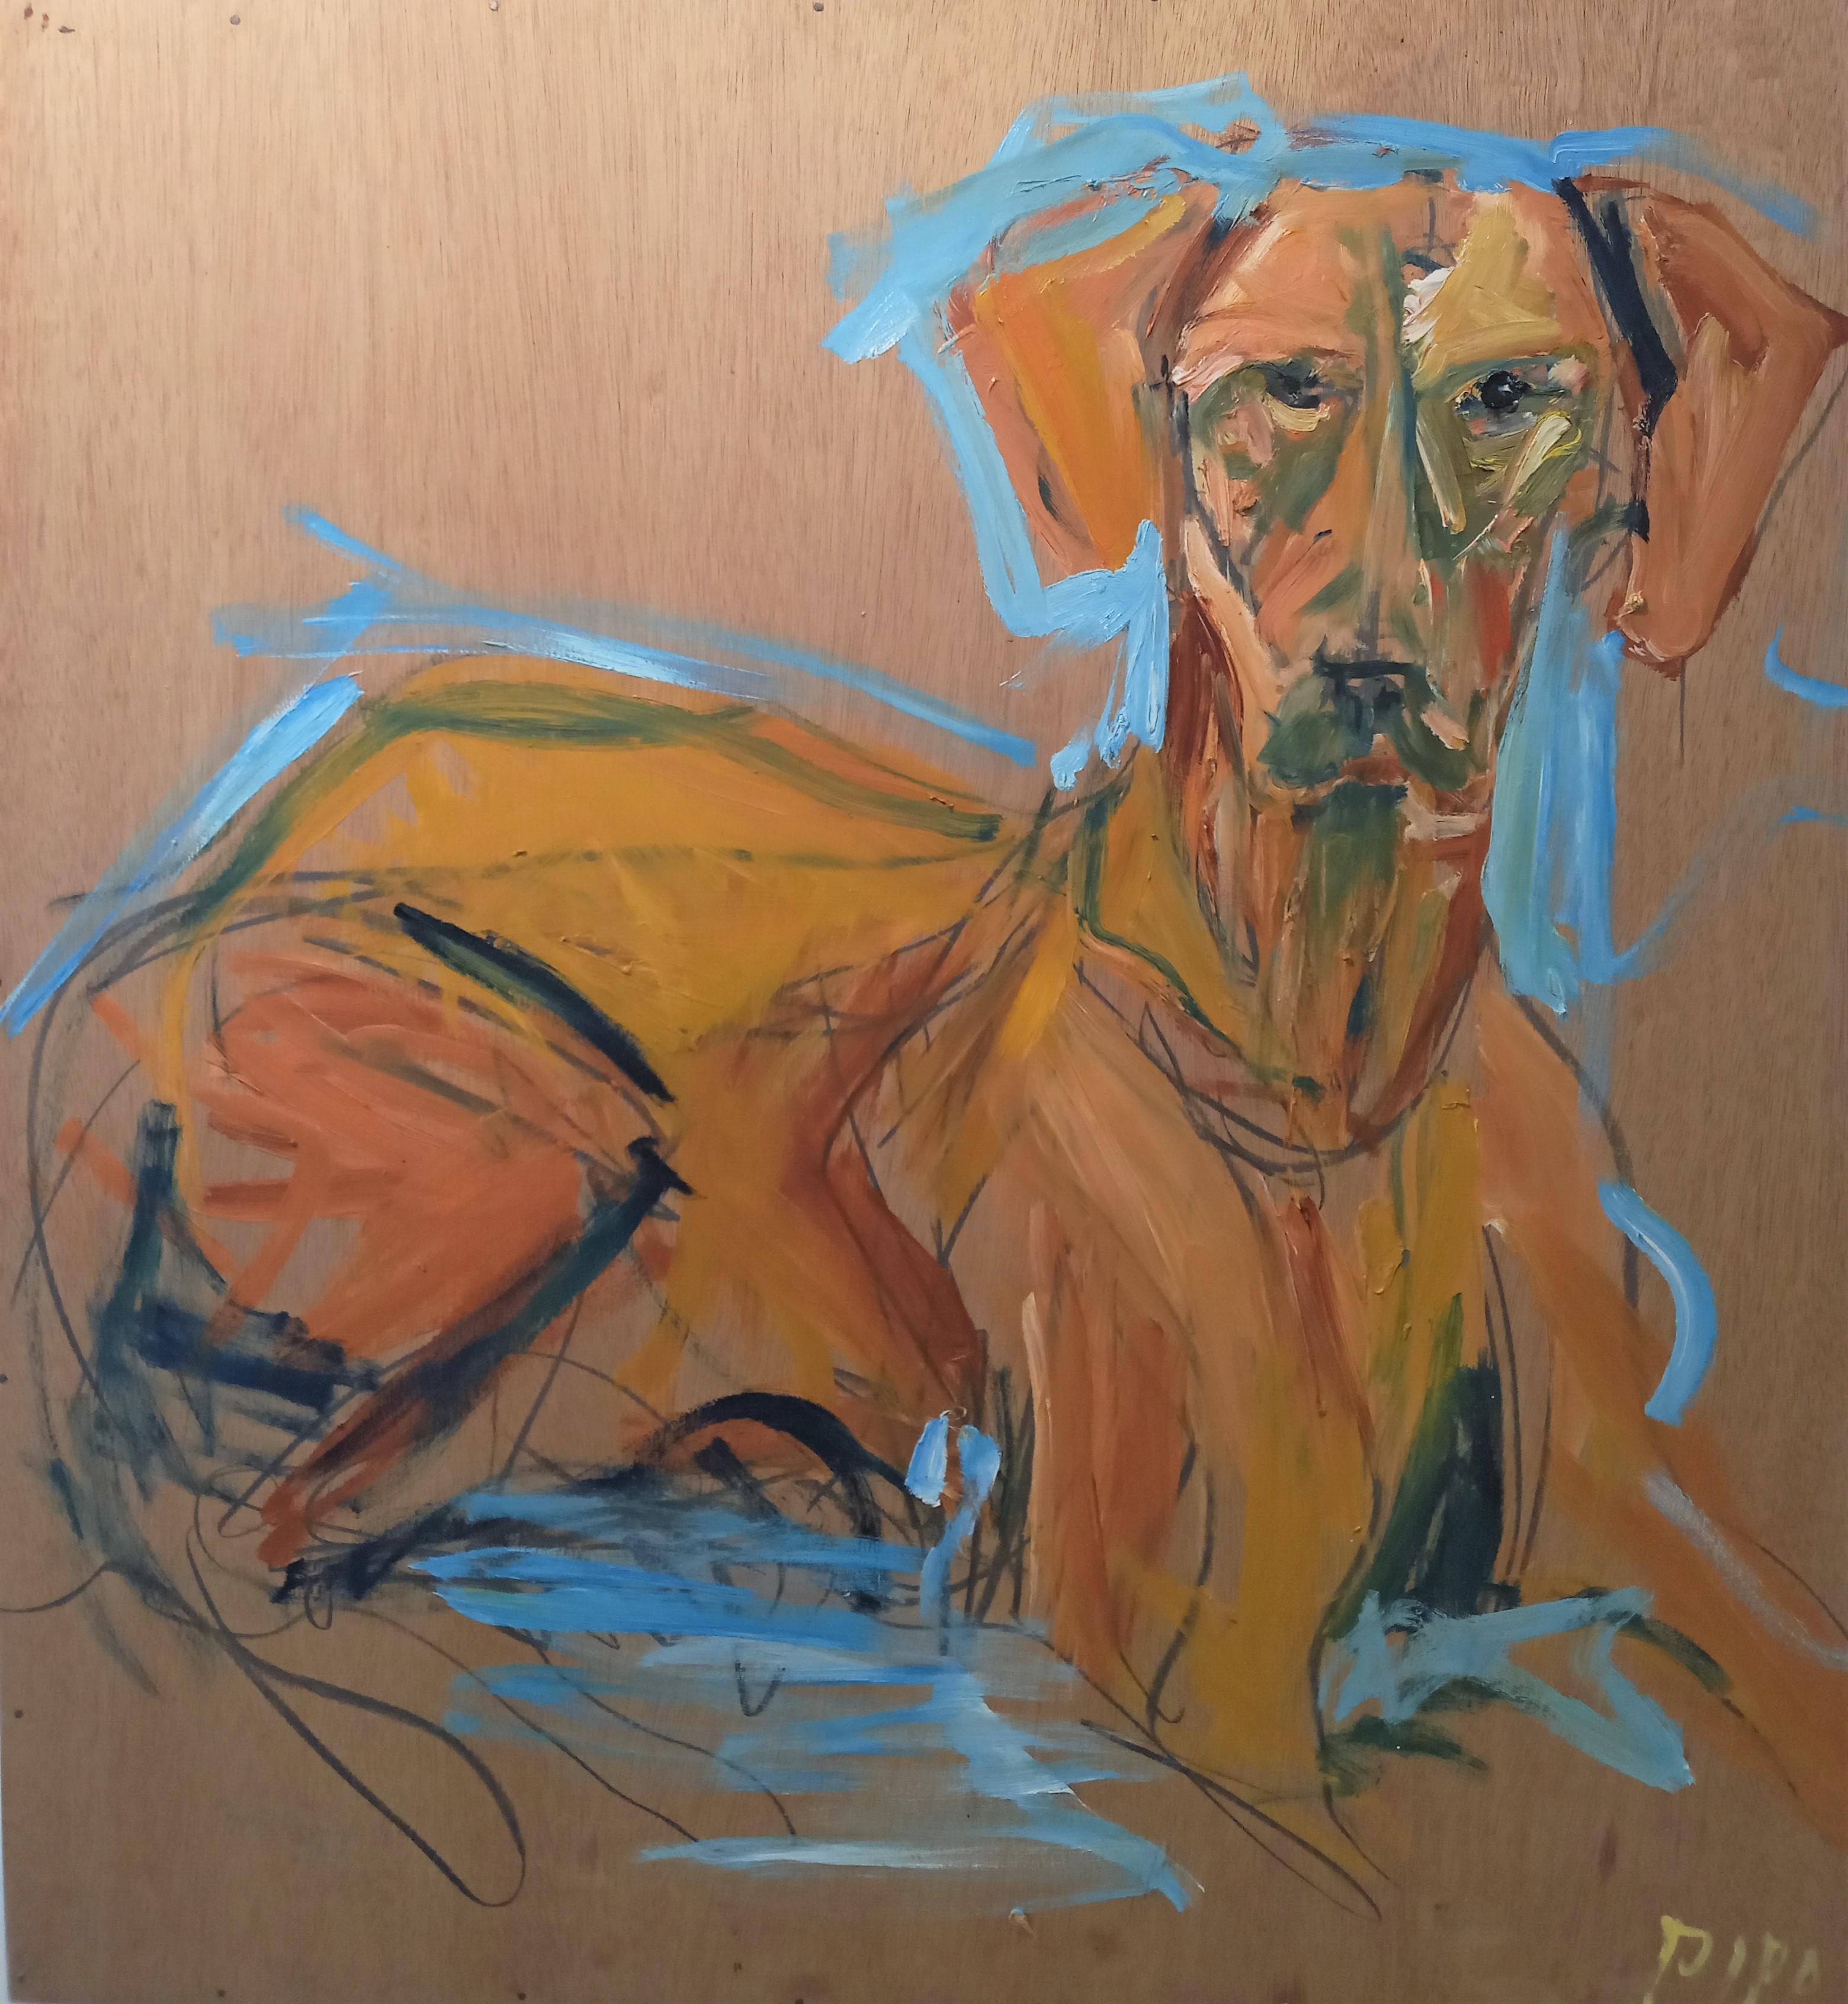 PERRO JAGGER, mixed media on wood, 92 cm x 92 cm